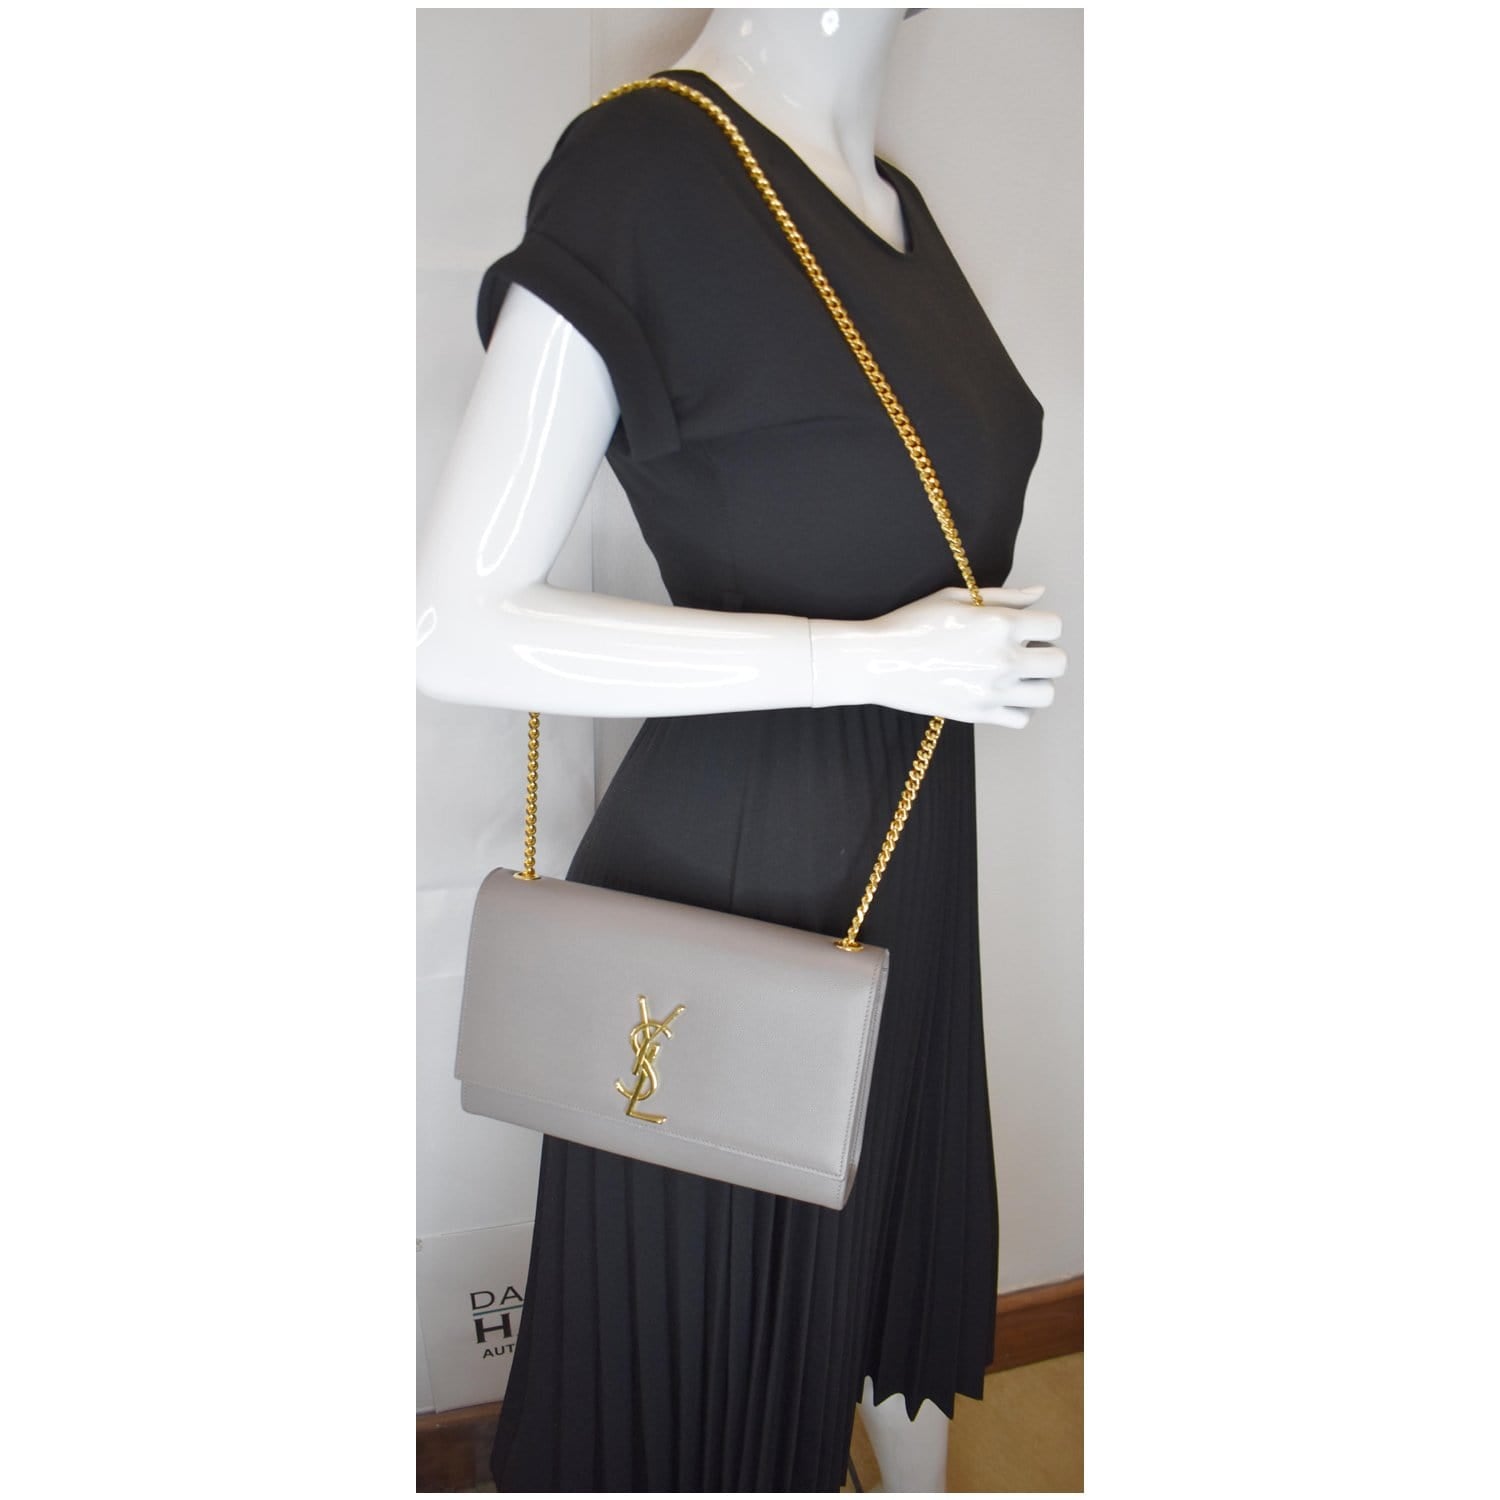 SAINT LAURENT Handbag 487213 BRM04 Carrege 2WAY leather gray Women Use –